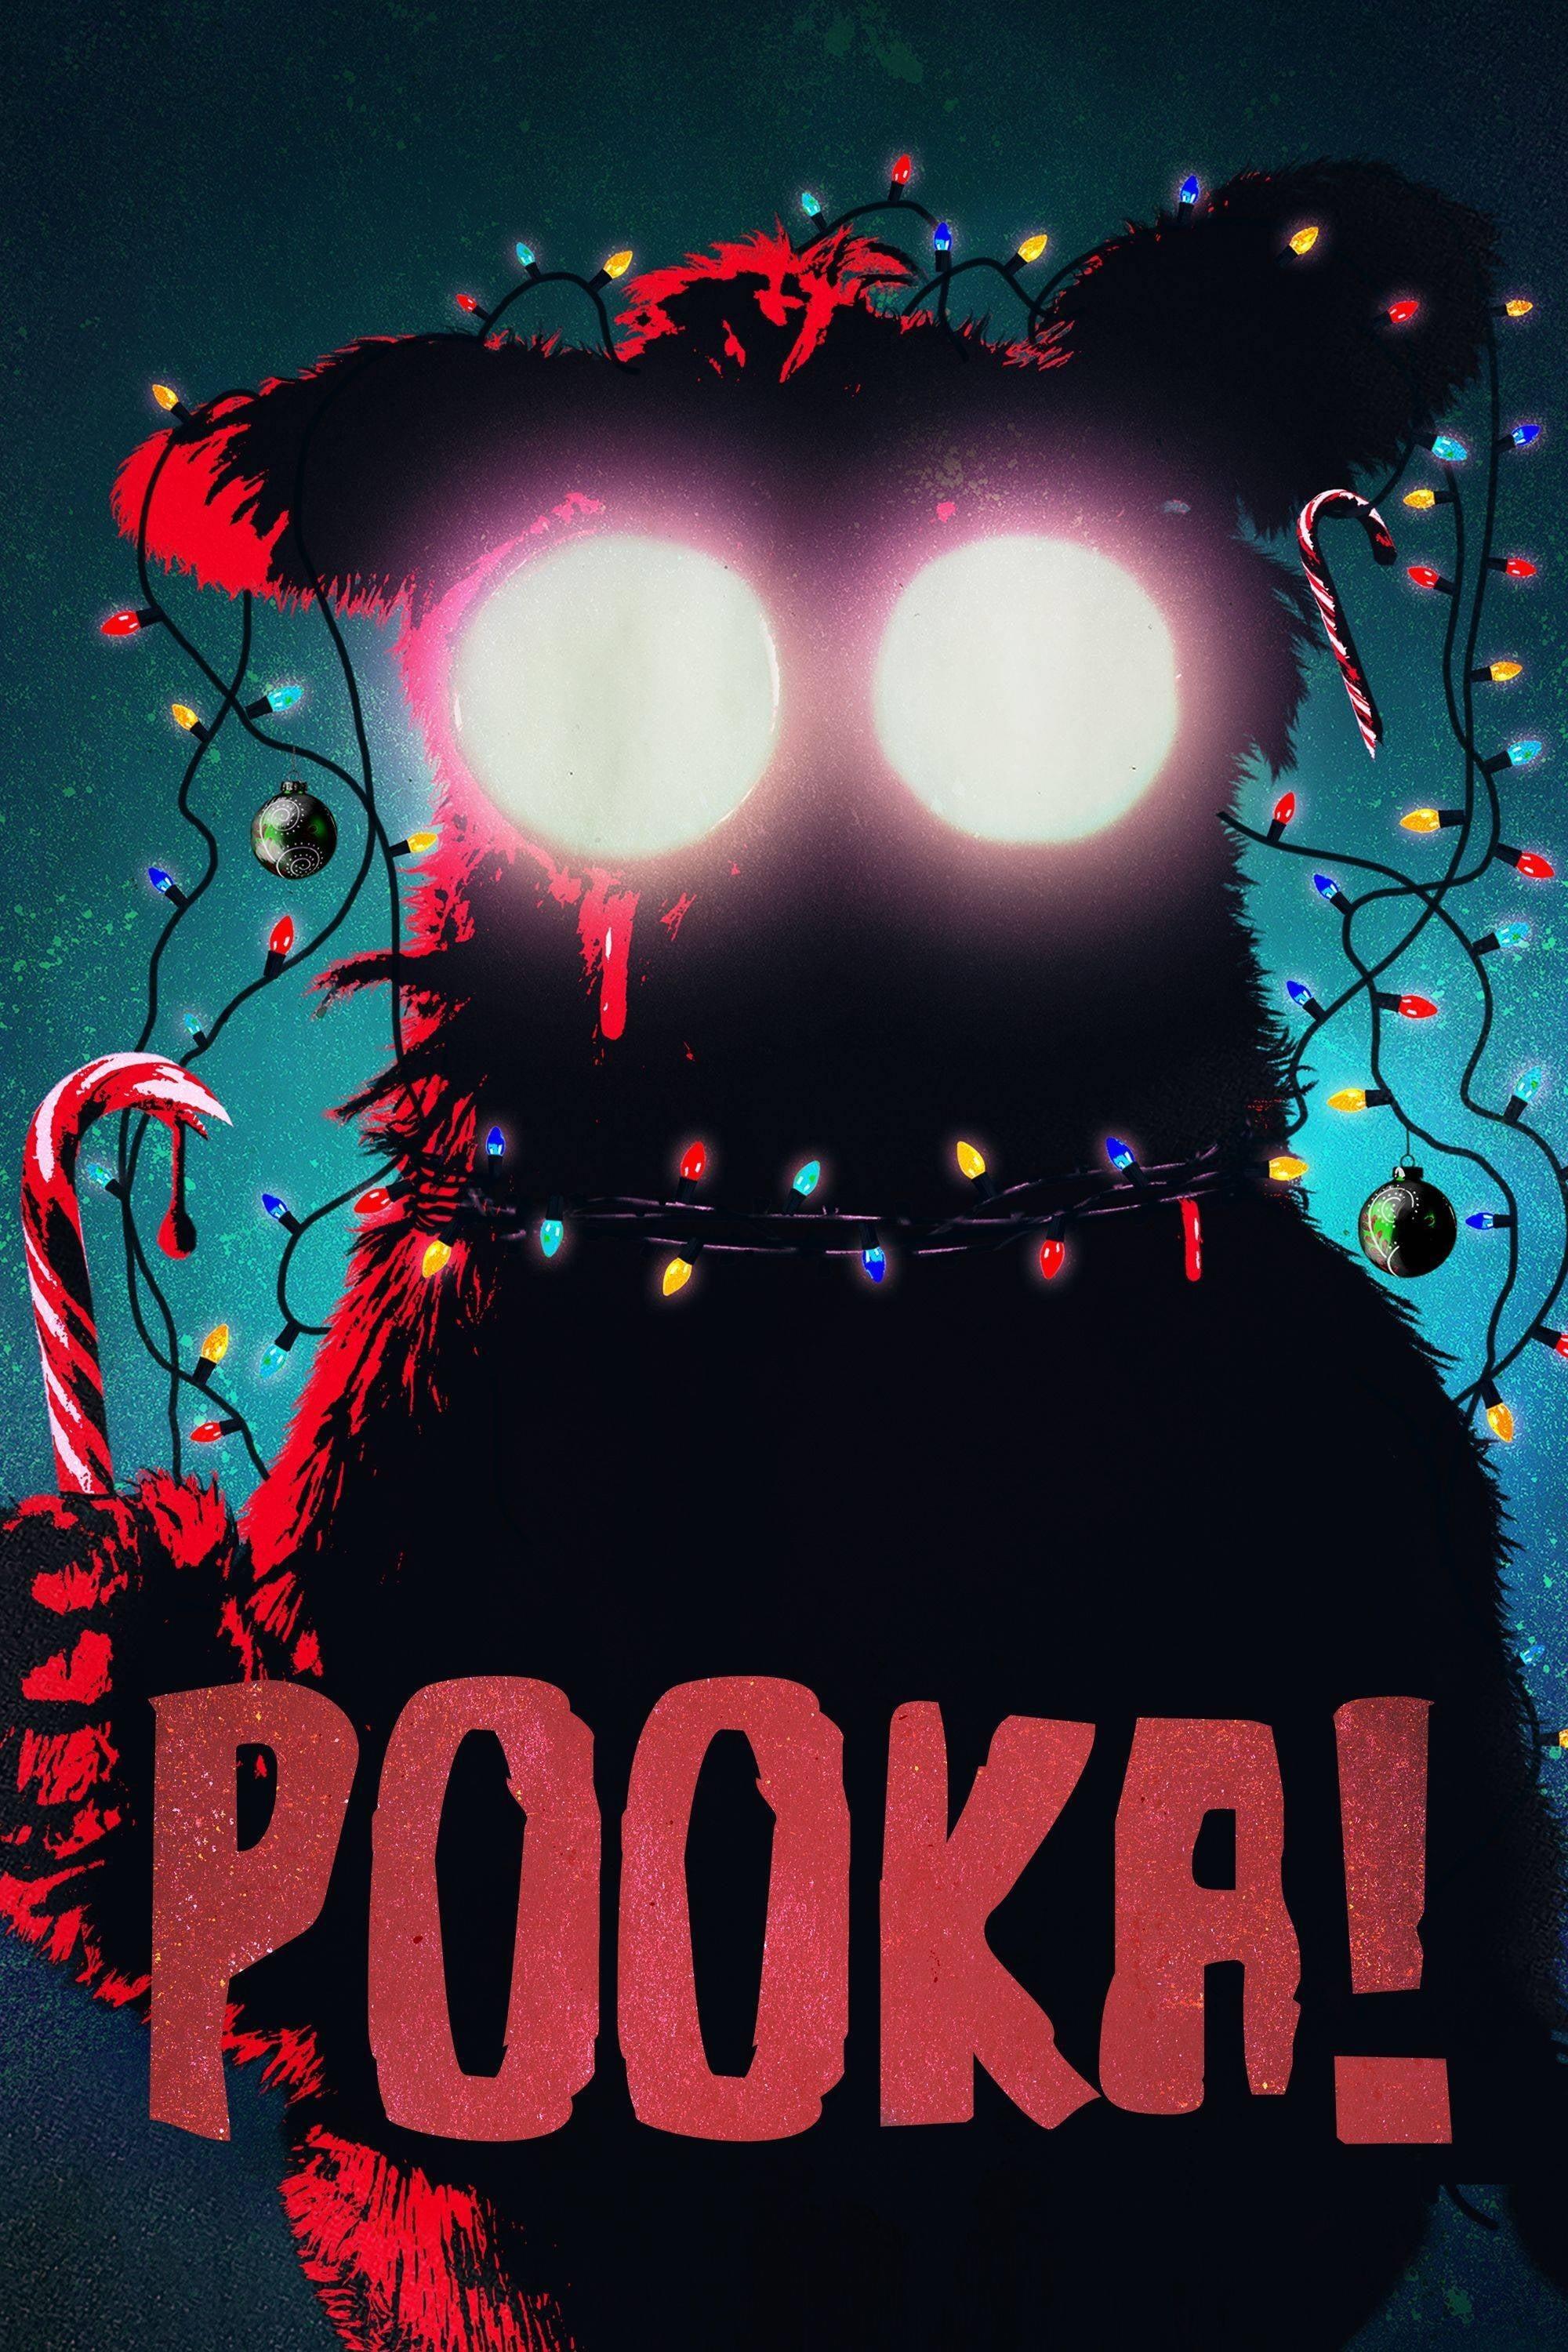 Pooka! poster